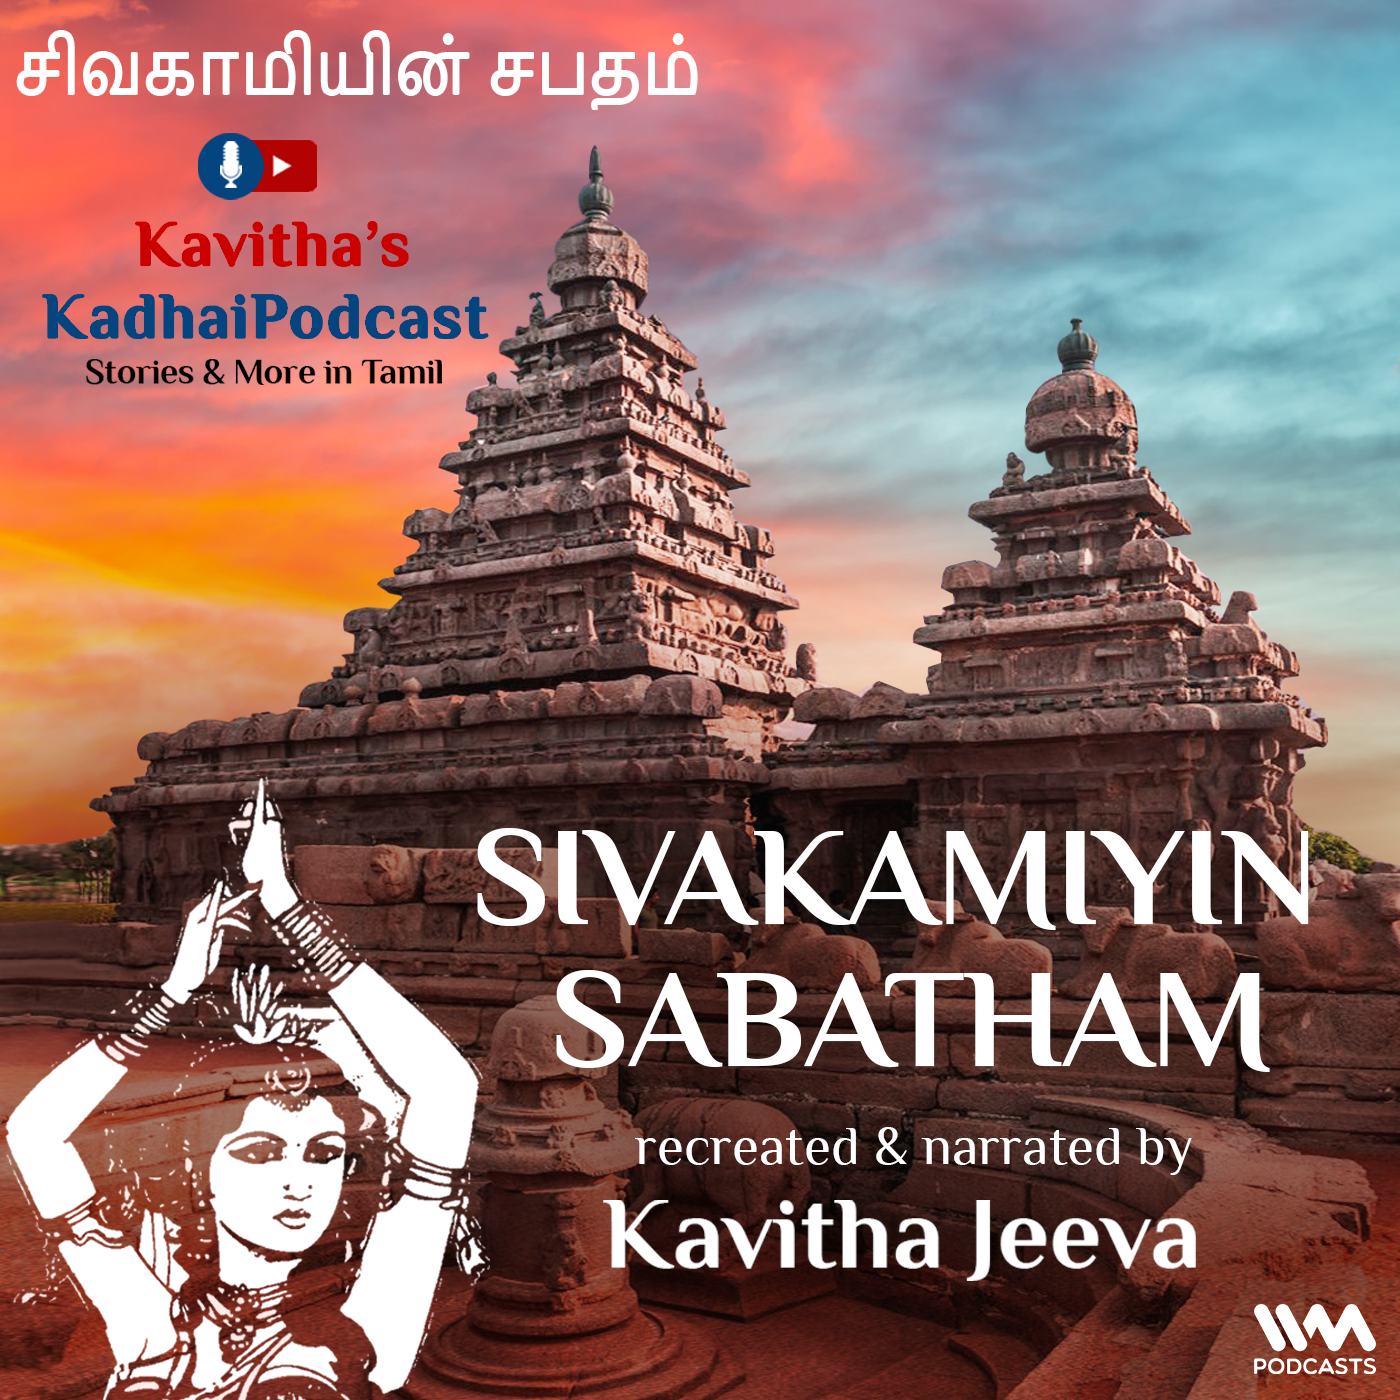 KadhaiPodcast's Sivakamiyin Sabatham with Kavitha Jeeva - Episode #92